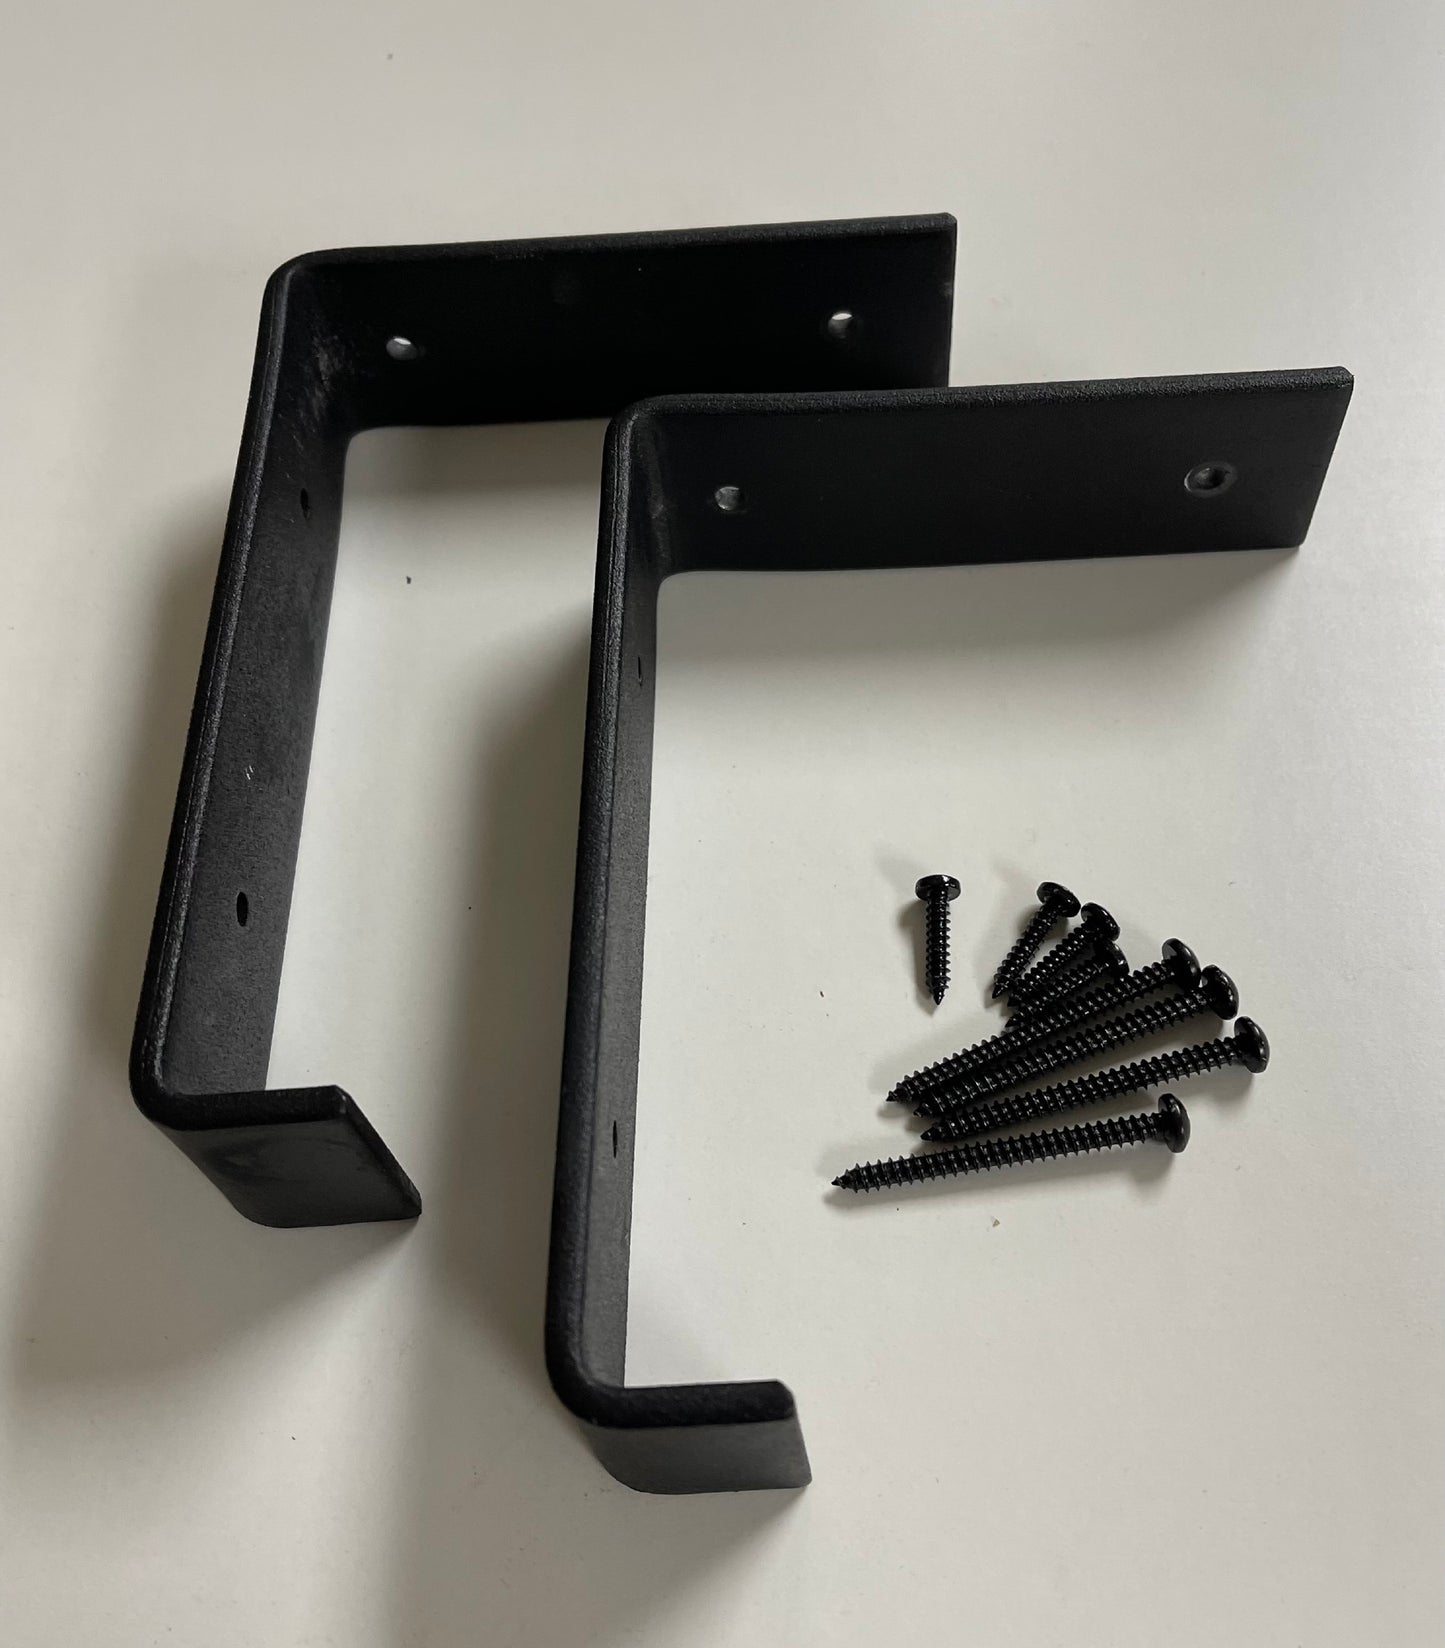 Premium American Black Walnut Industrial Style Shelf with Lipped Up Brackets, 20-25mm (1 Inch) Depth